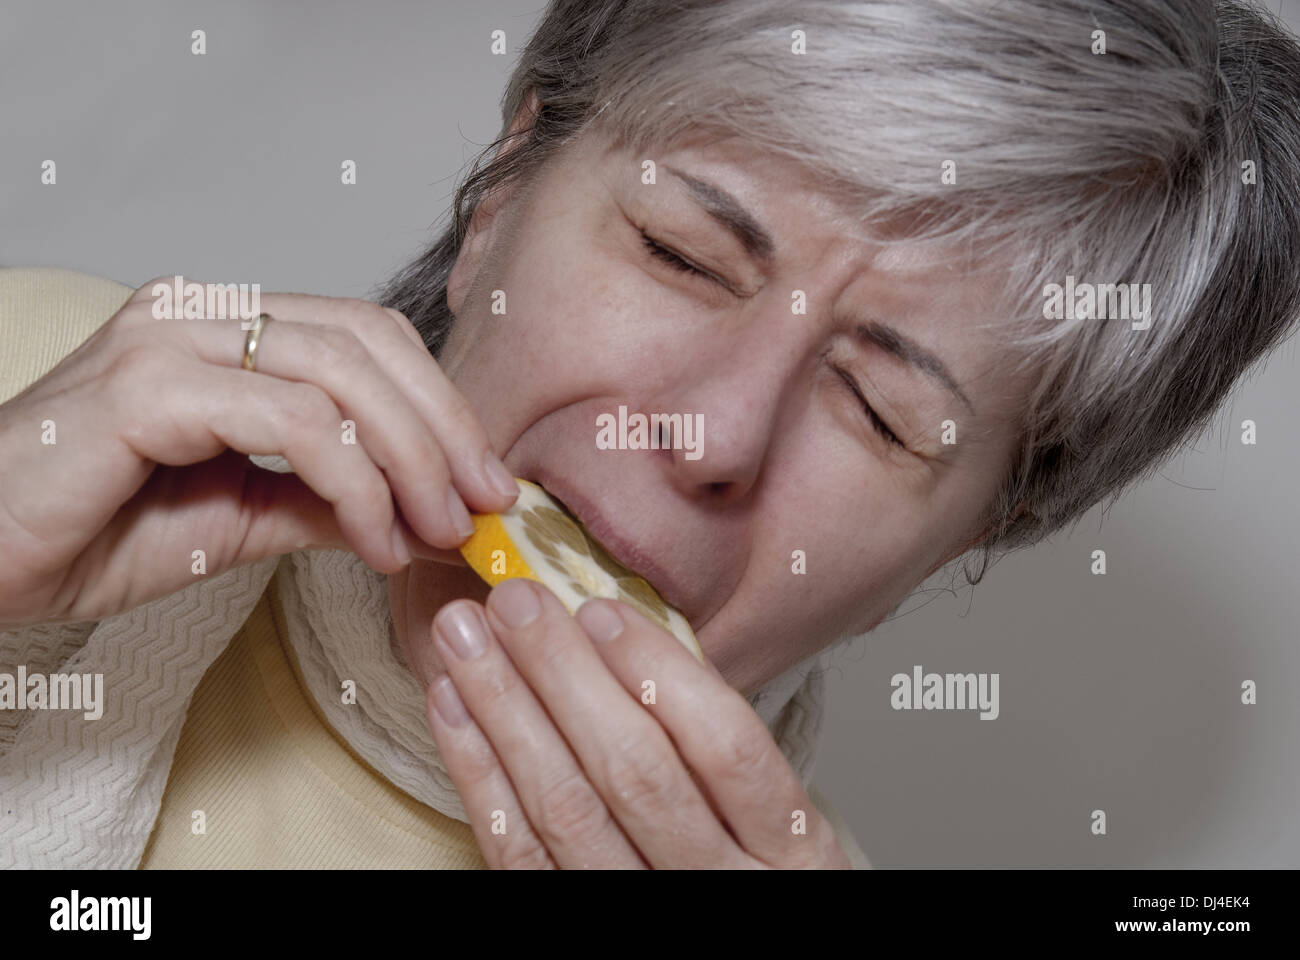 Woman biting into a lemon Stock Photo